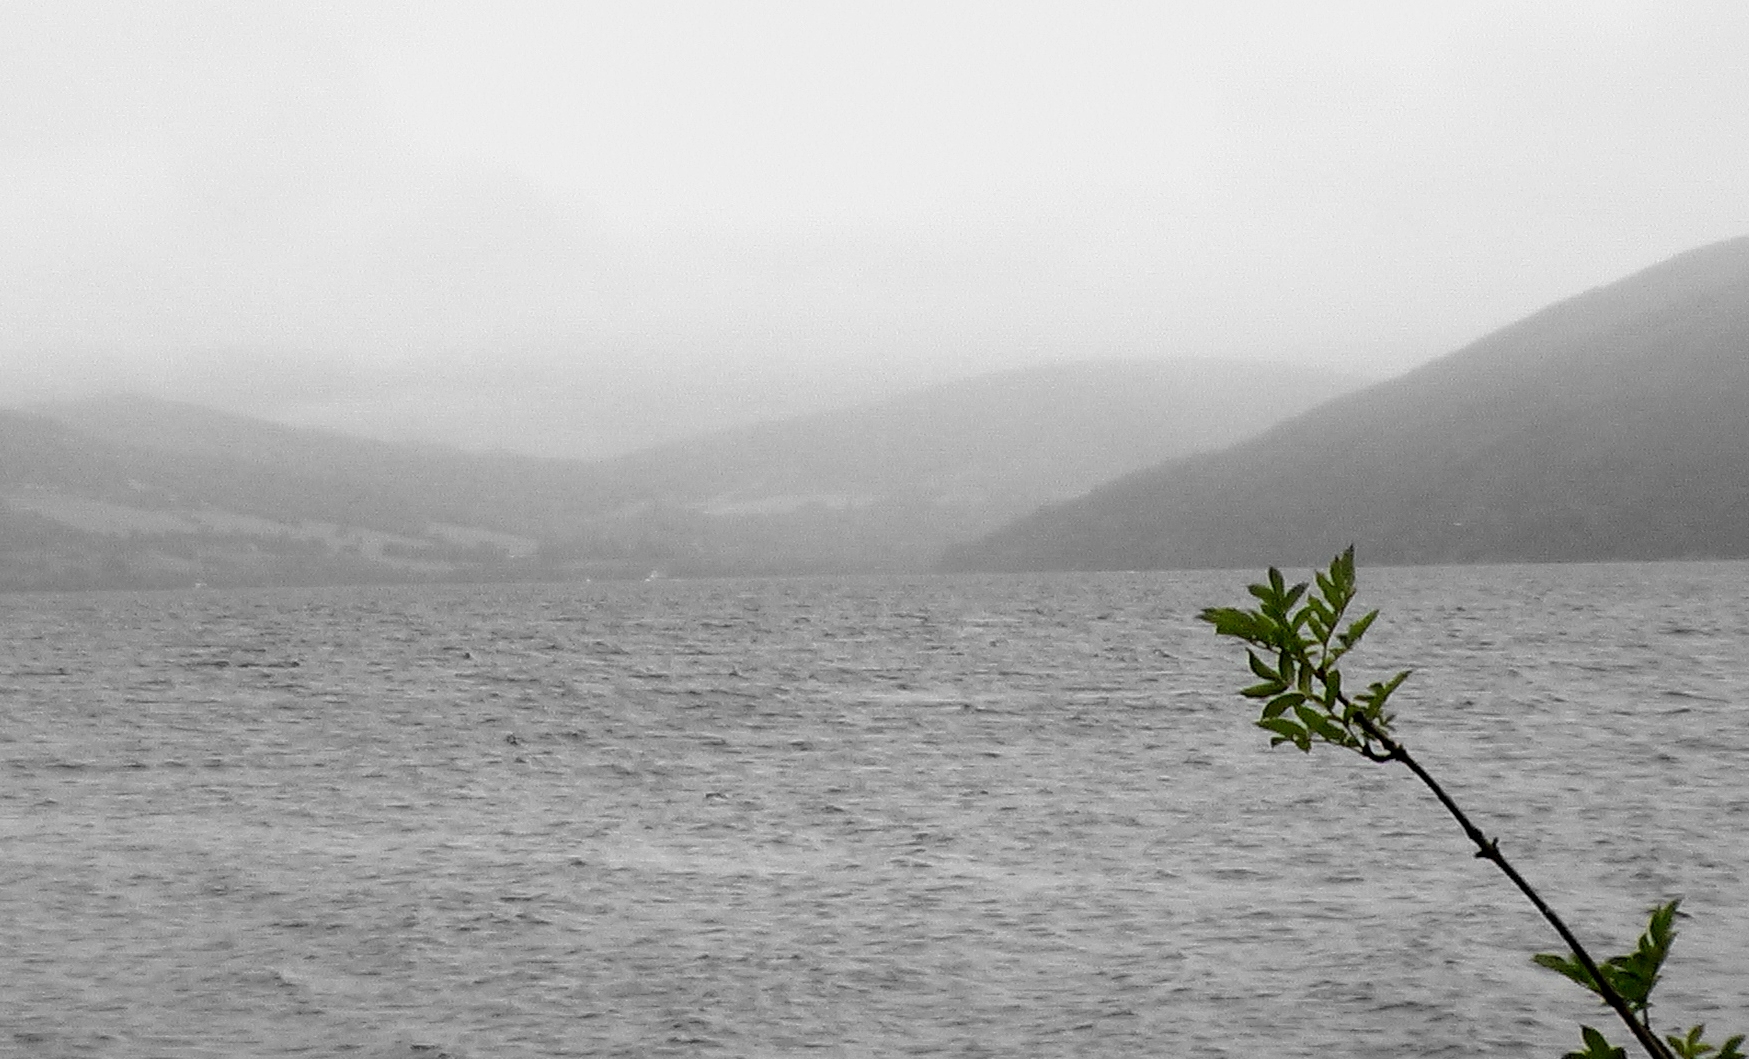 Photograph: Loch Ness View